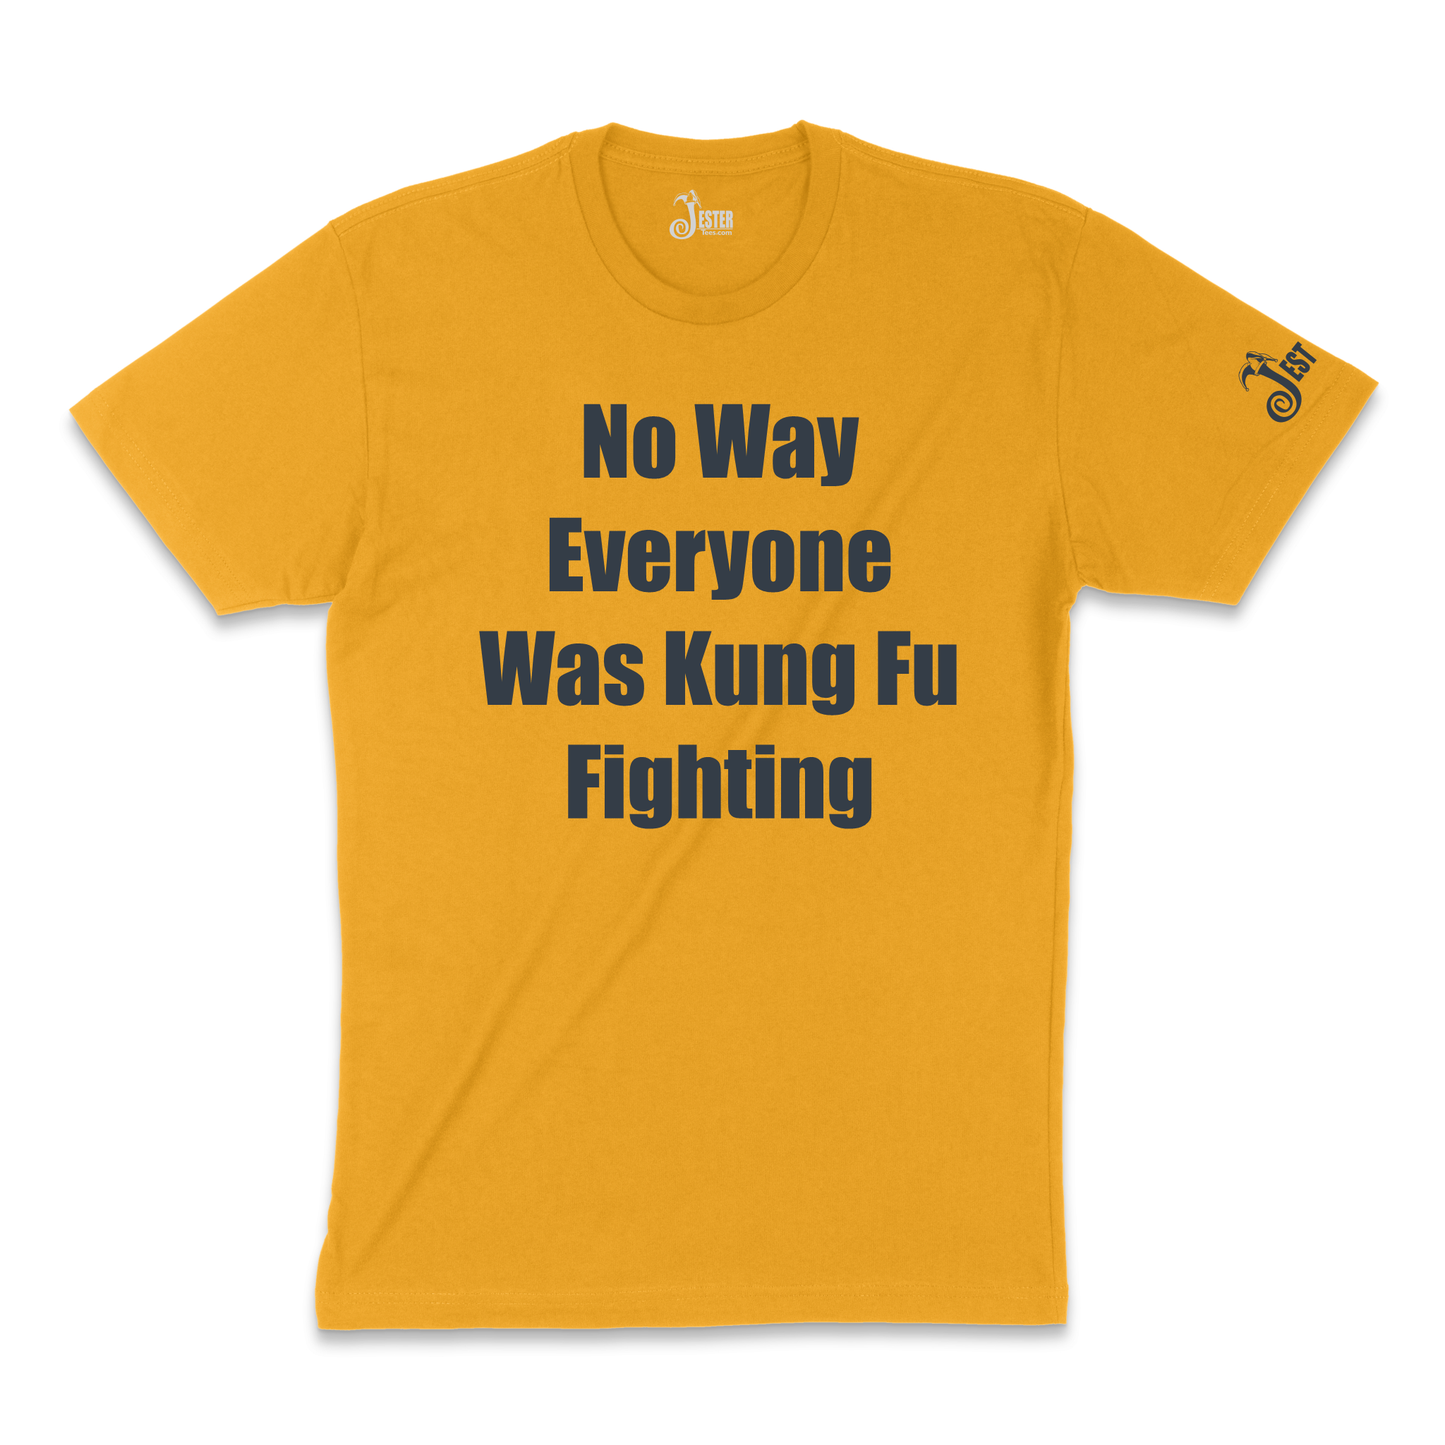 No Way Everyone Was Kung Fu Fighting Funny Shirt